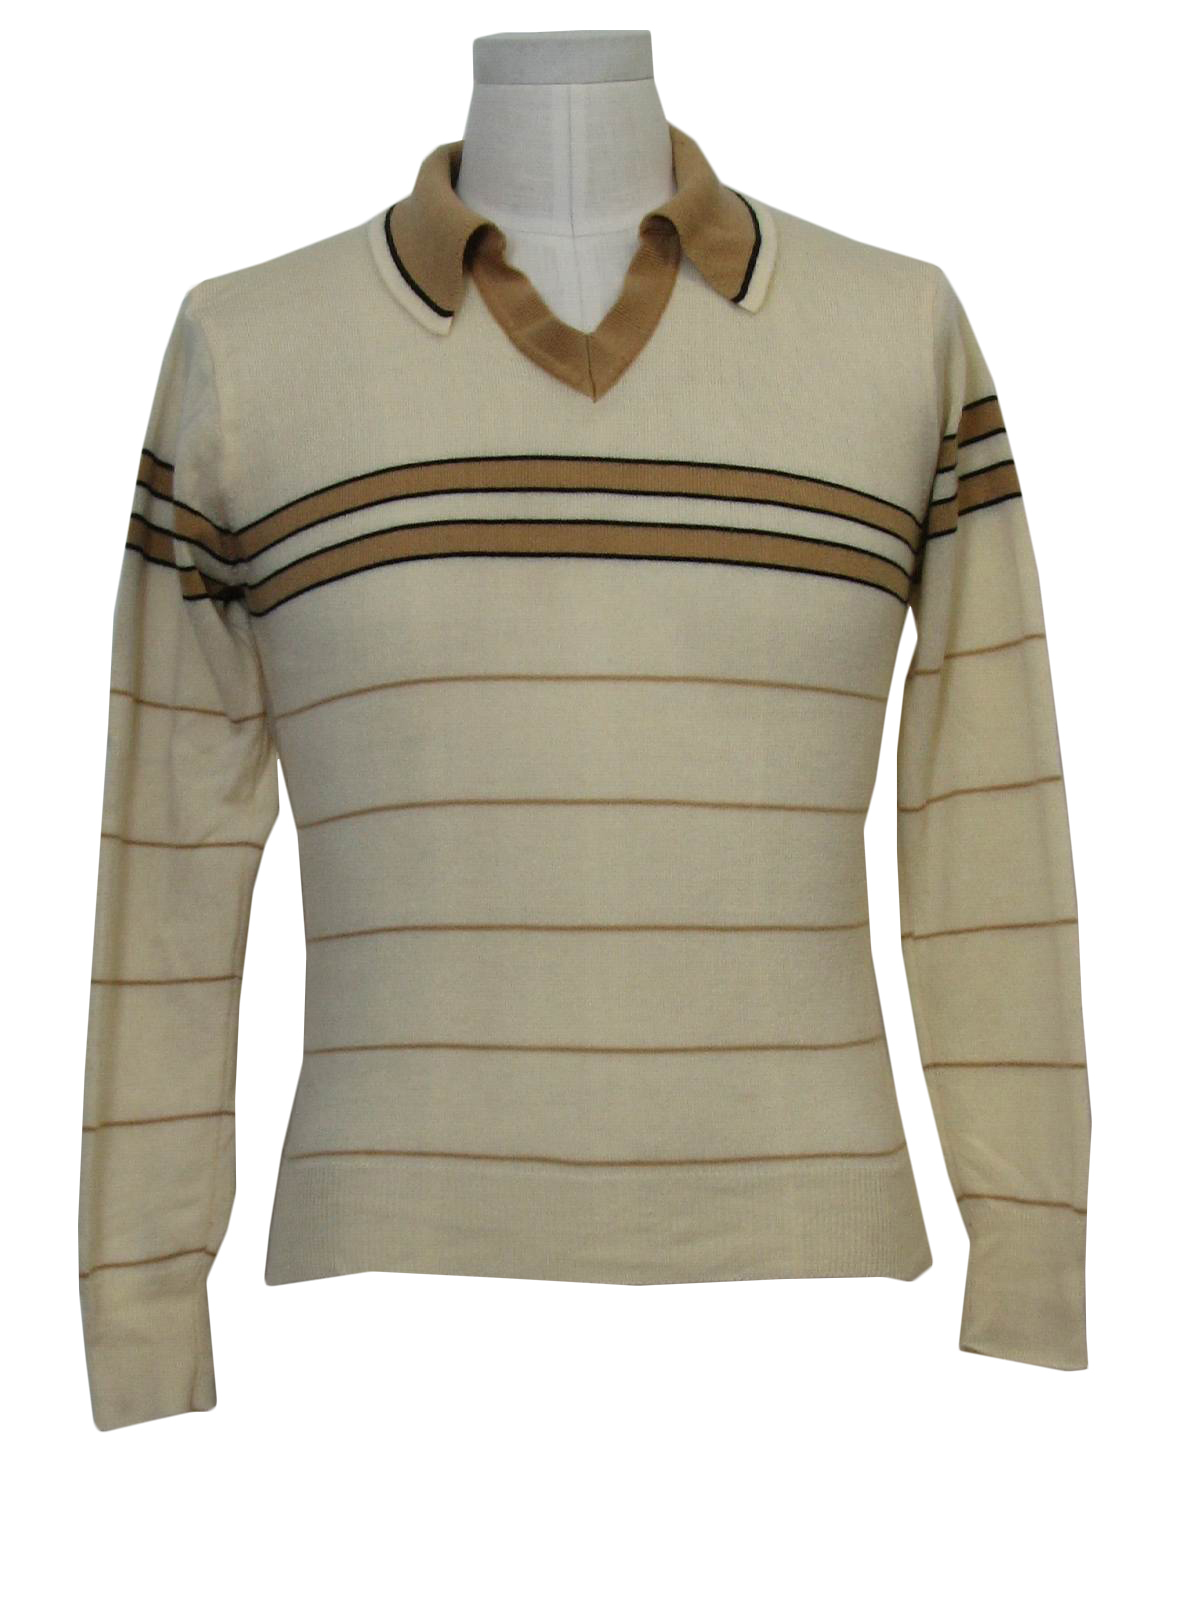 1970s Kennington Knit Shirt: 70s -Kennington- Mens cream